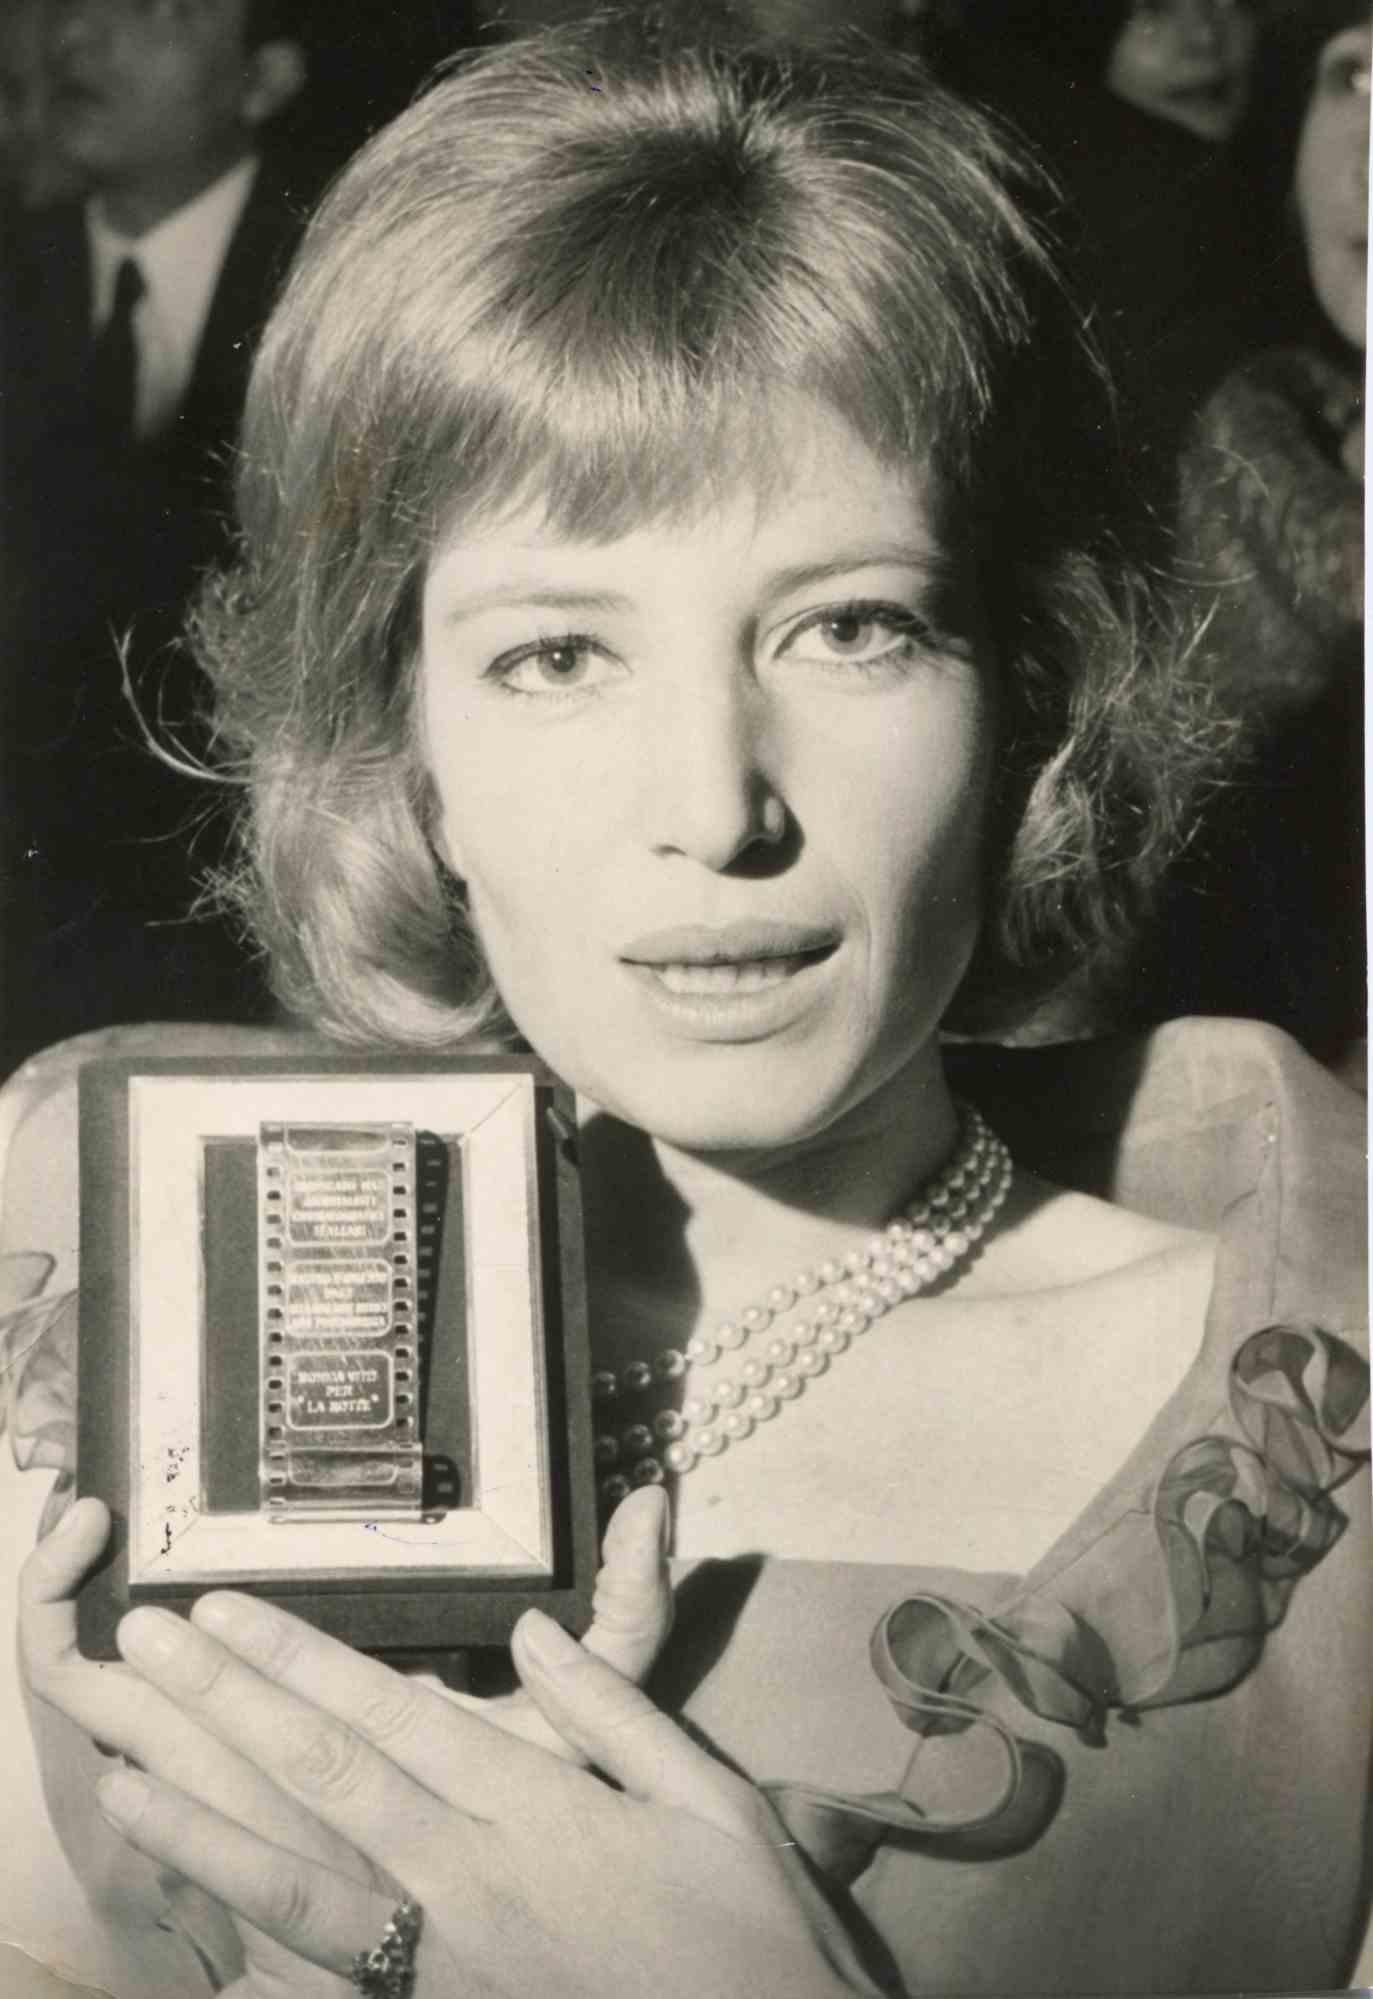 Associated Press Black and White Photograph - Portrait of Monica Vitti - Vintage Black and White Photo - 1960s